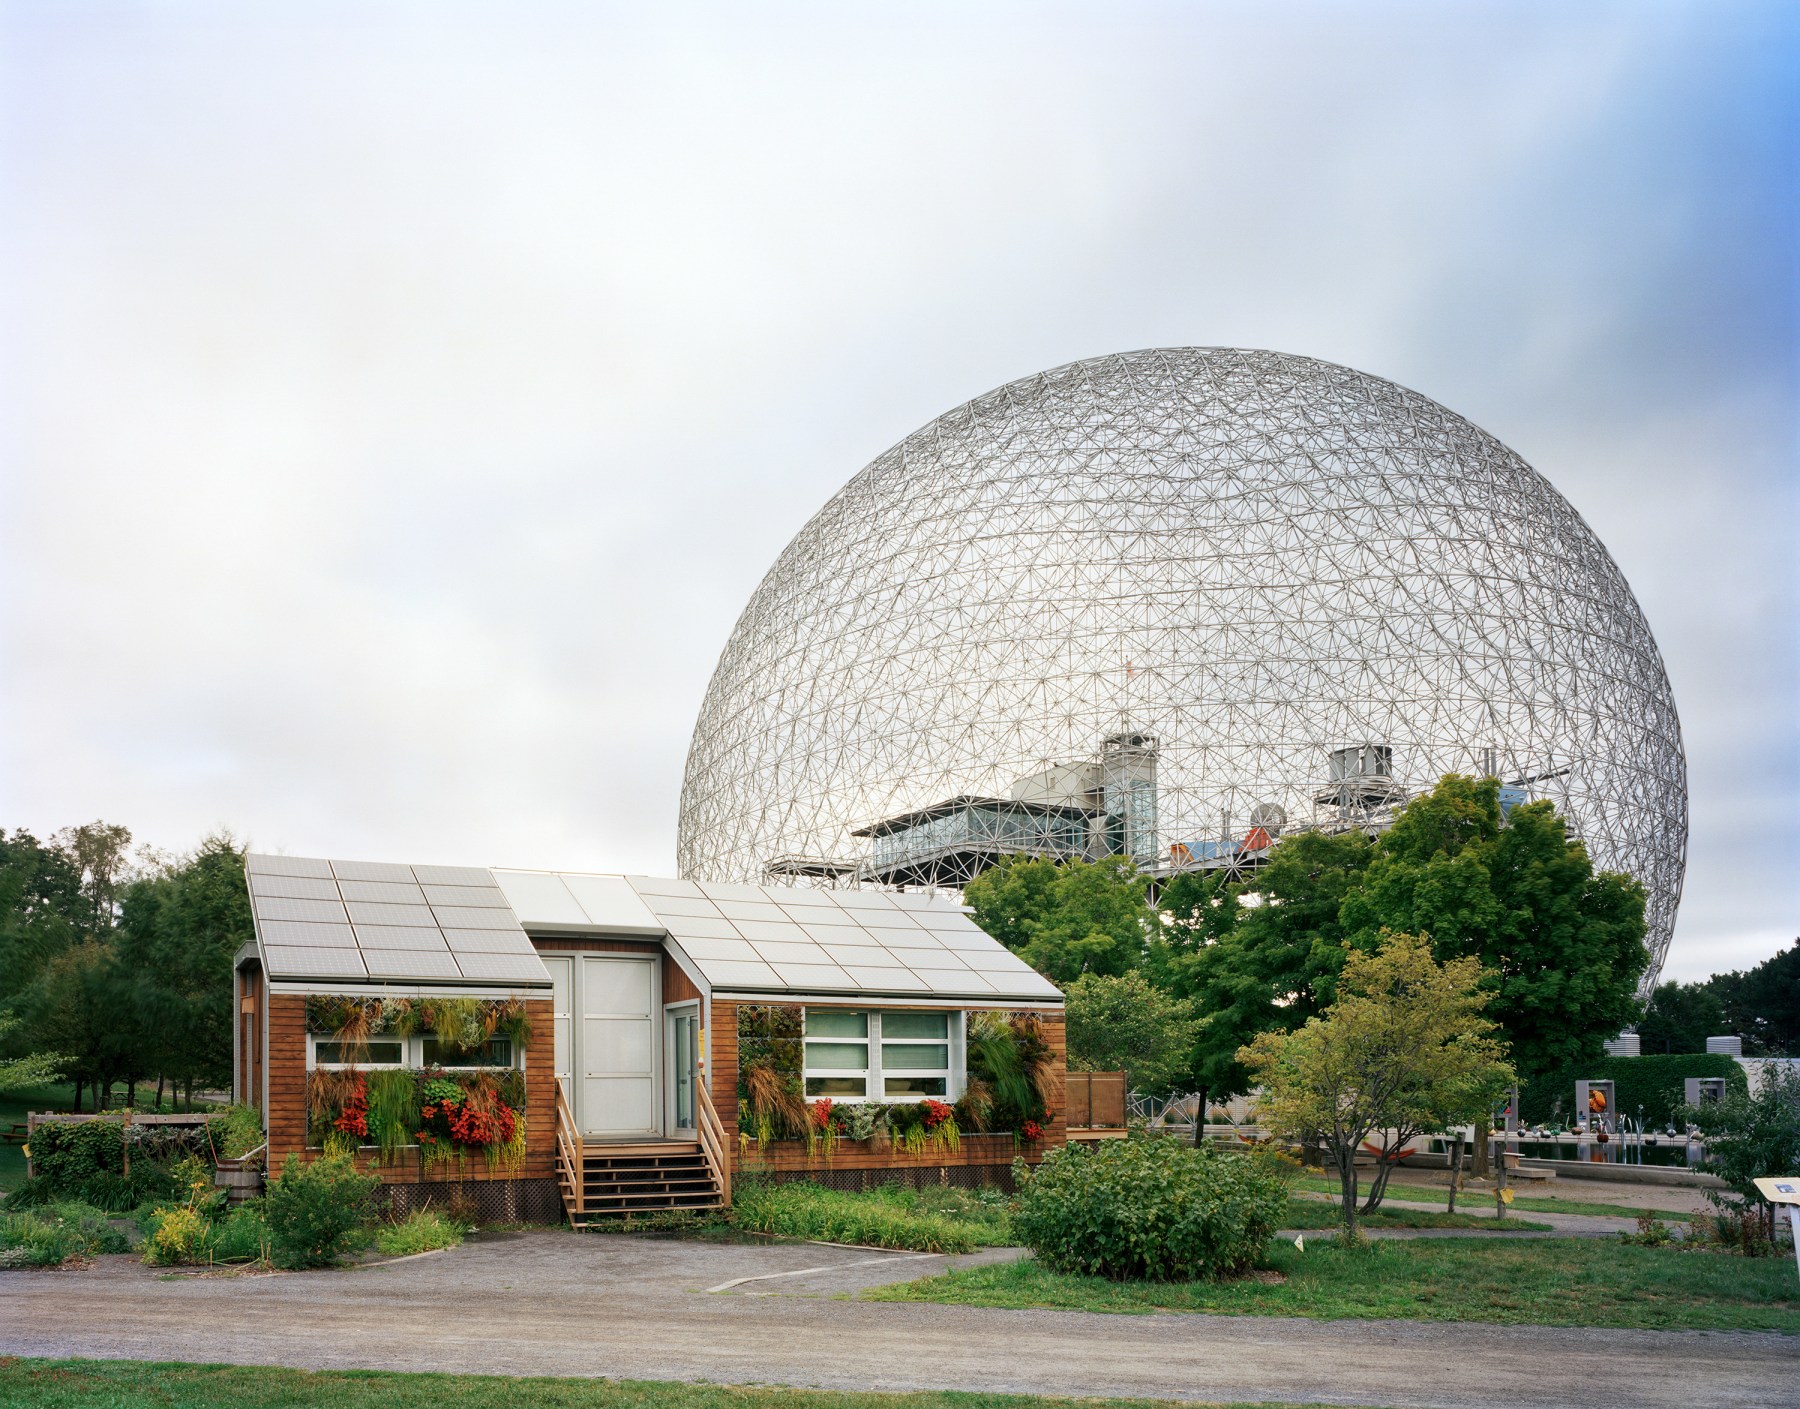 Jade Doskow photograph of Buckminster Fuller's Geodesic Dome in Montreal